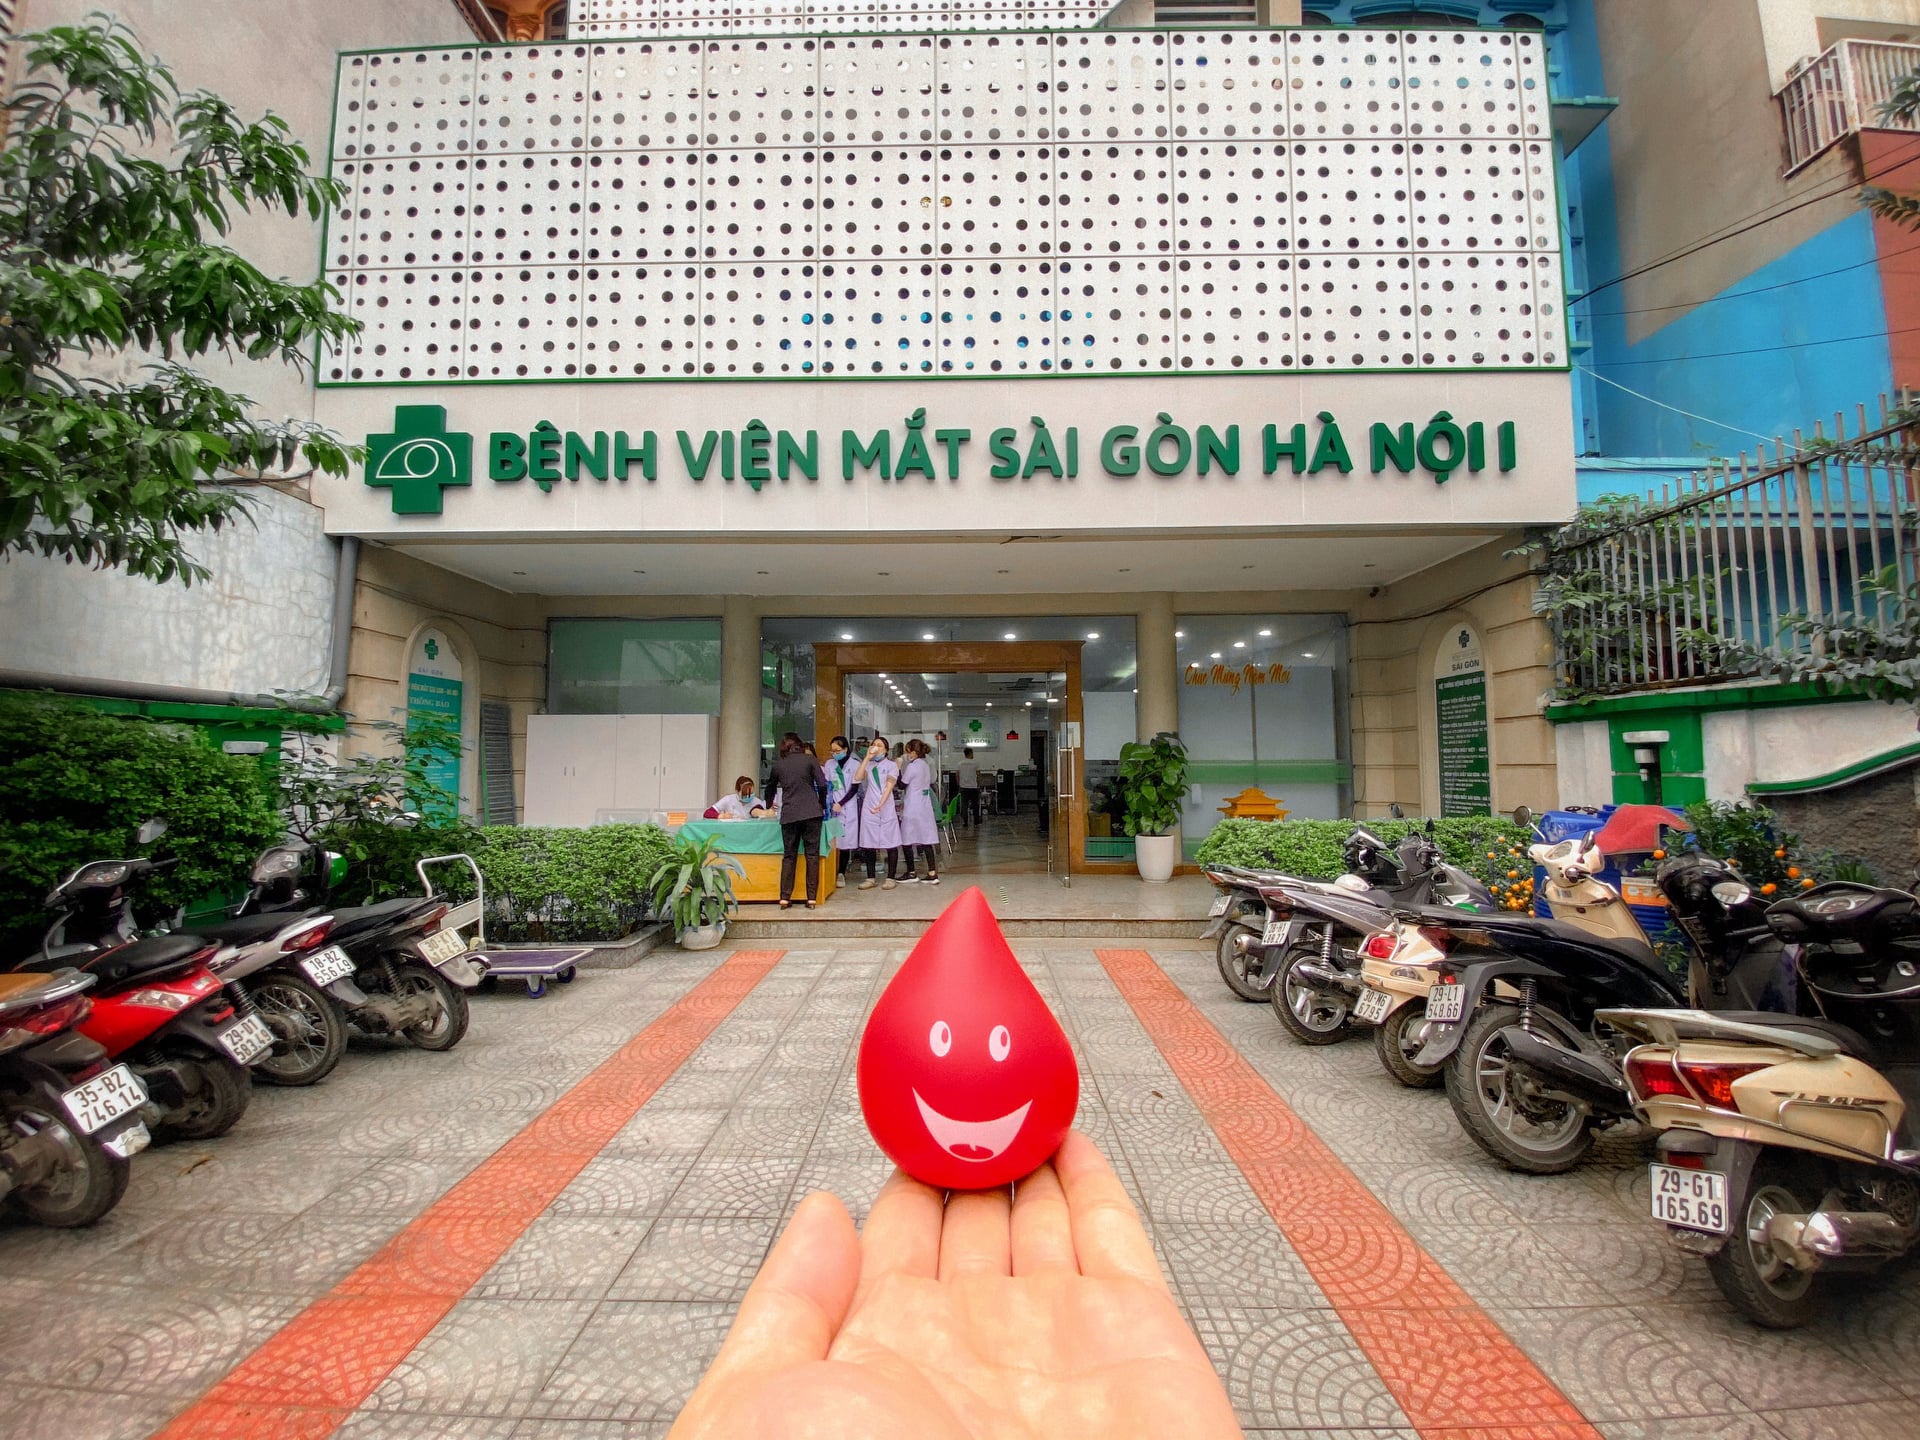 Saigon Hanoi Eye Hospital I